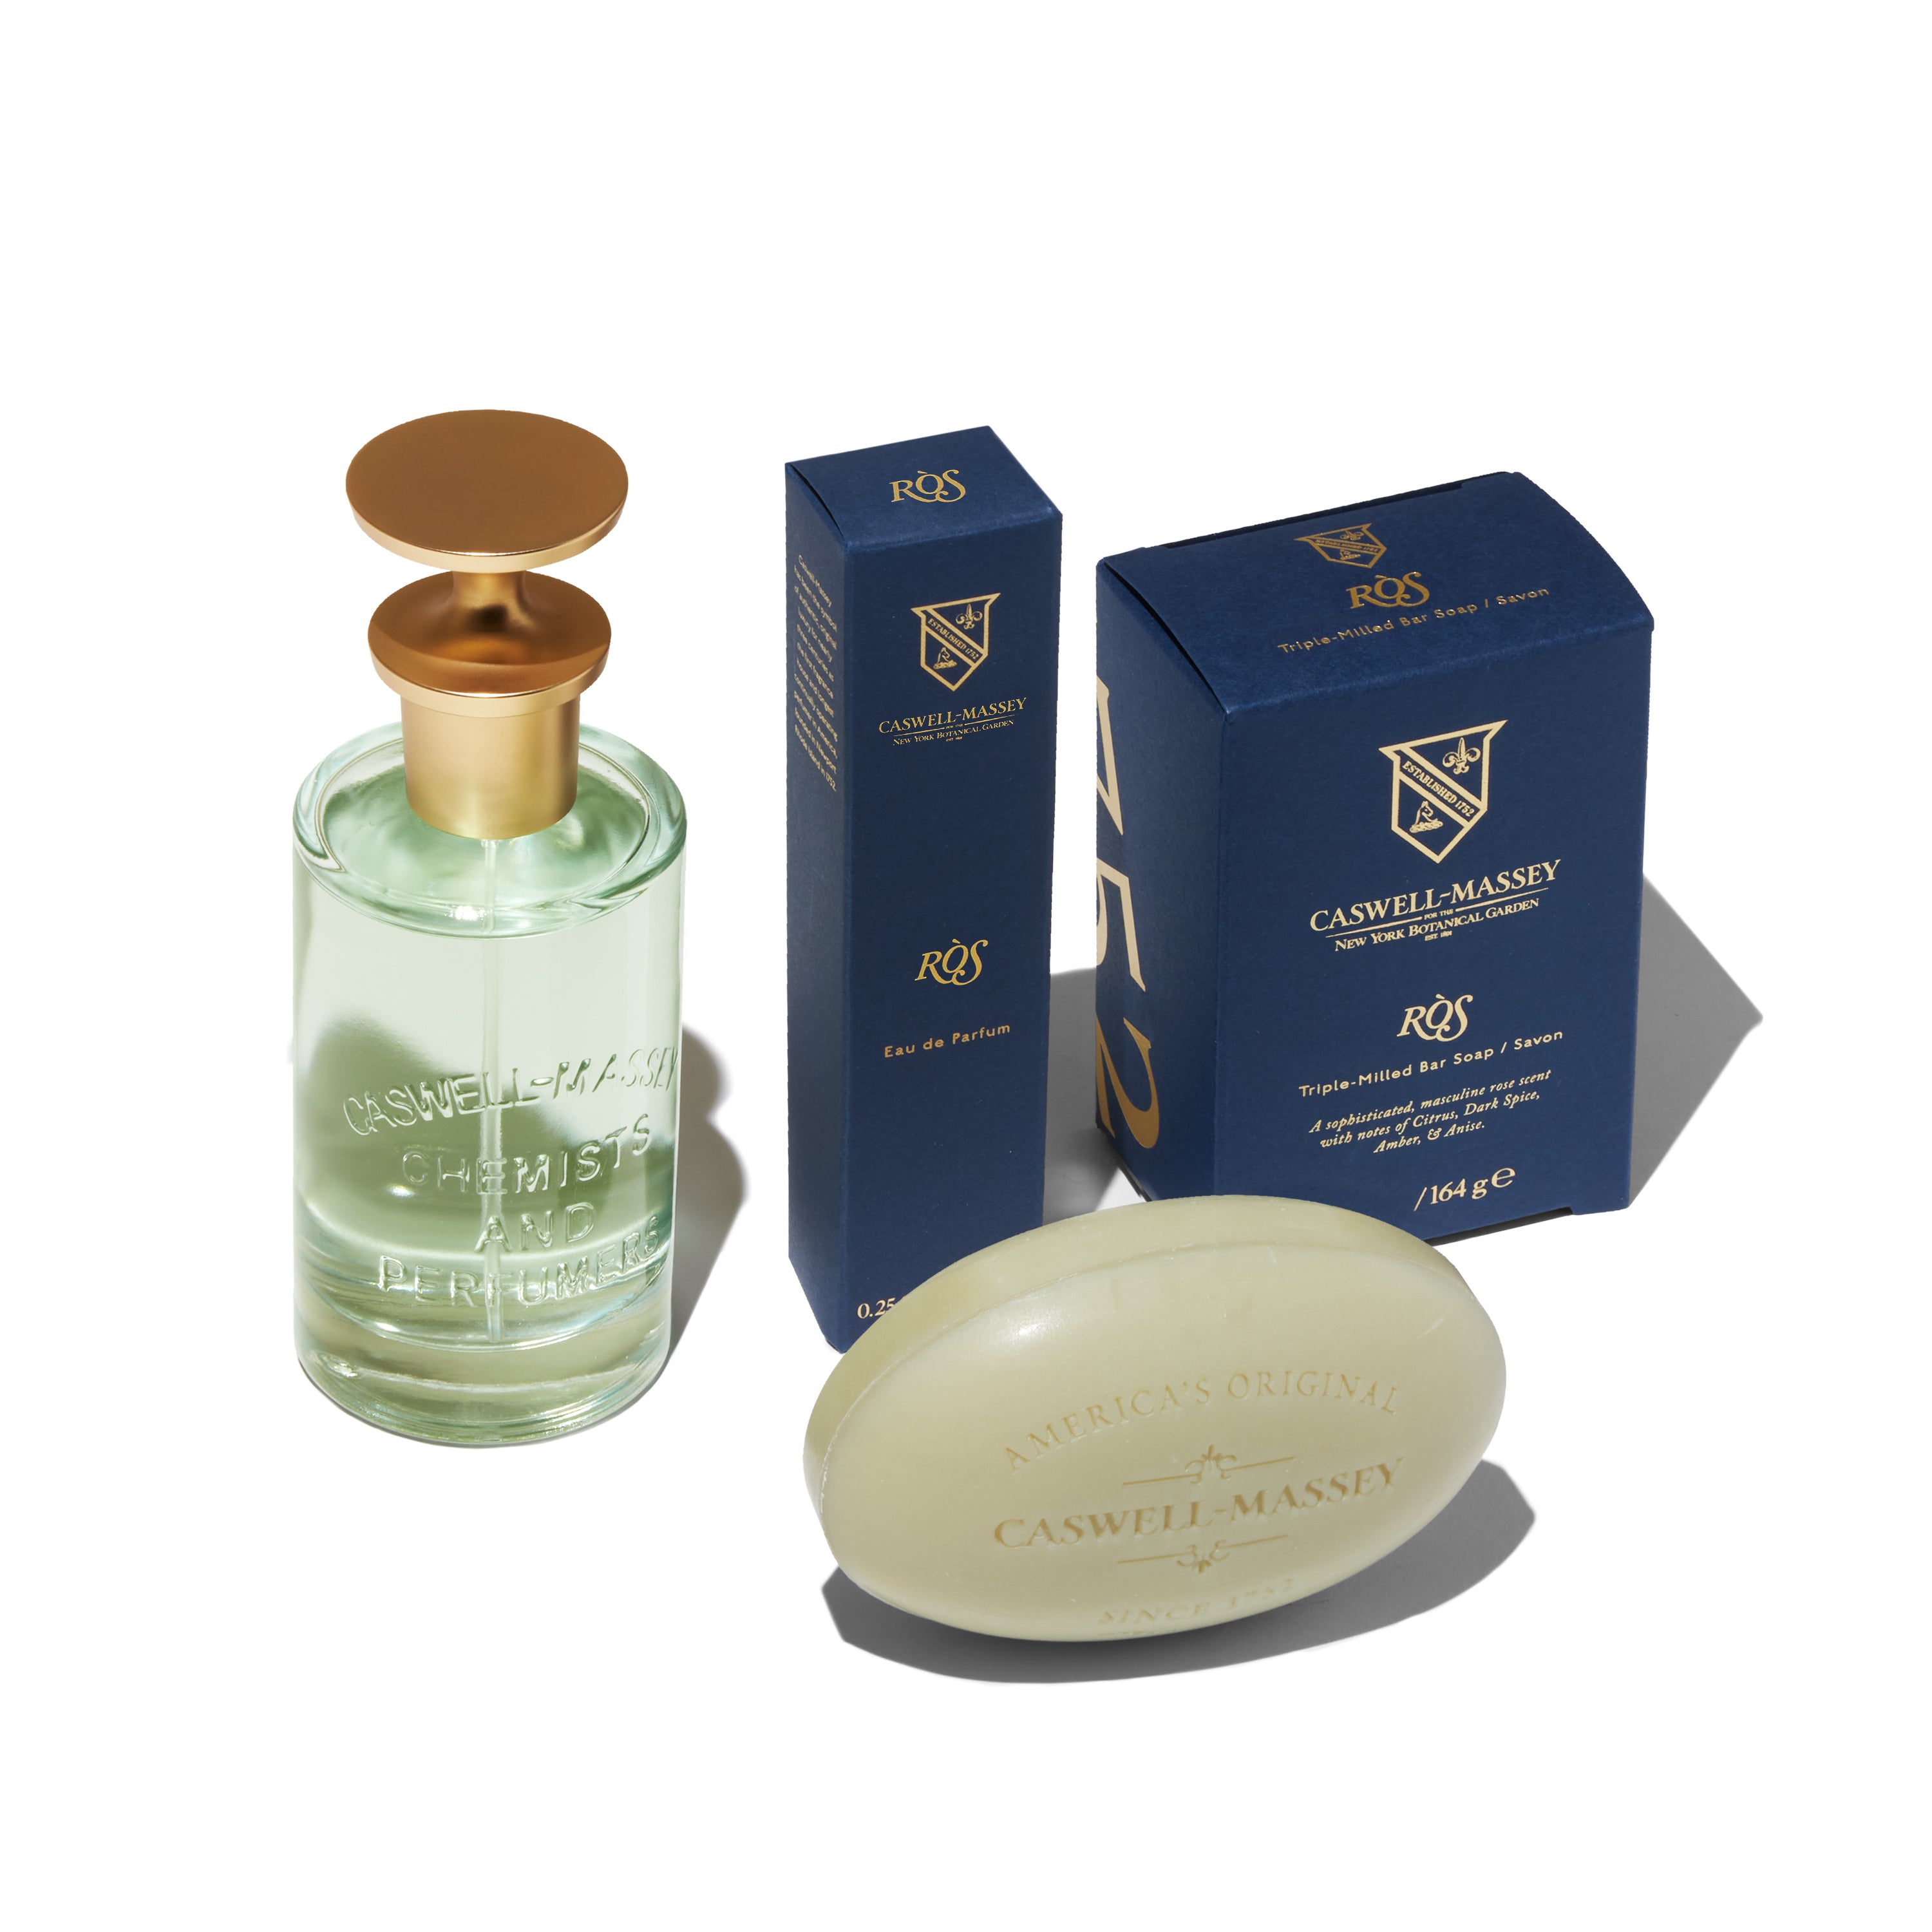 Caswell-Massey RÒS Eau de Parfum showing full-size 100ml, travel-size 7.5ml, and RÒS Bar Soap